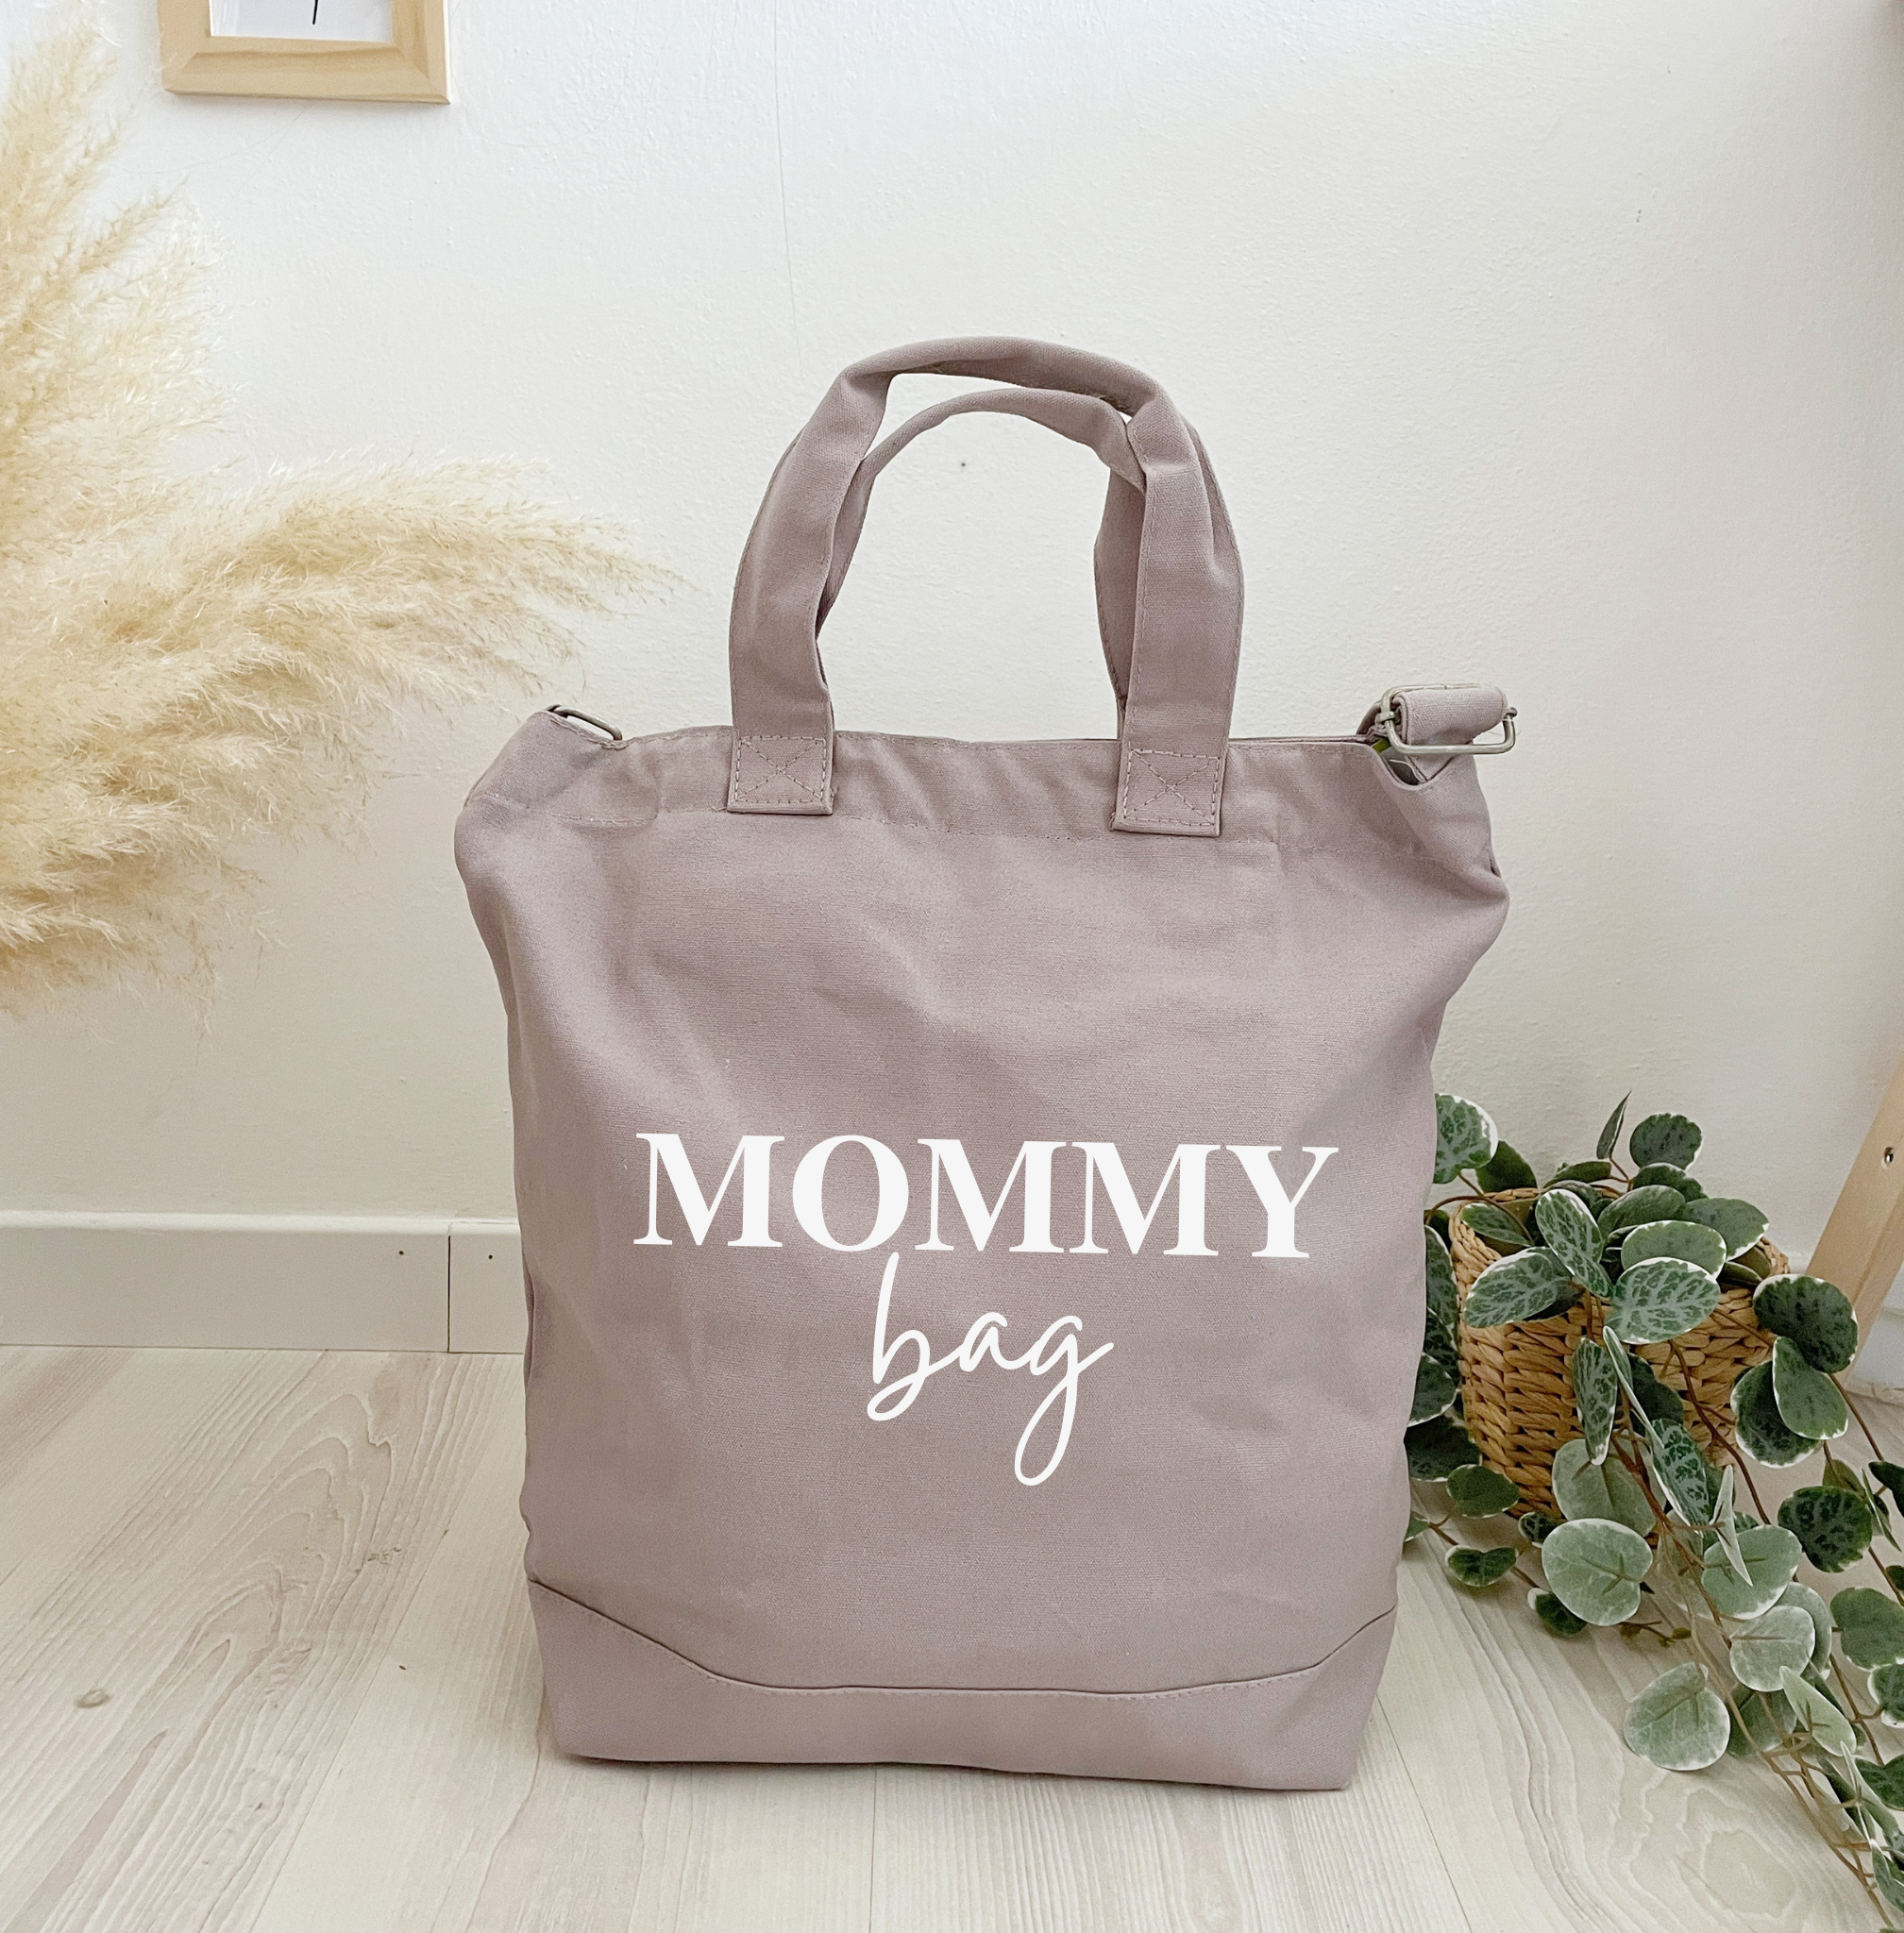 Mommy bag – giada giungi